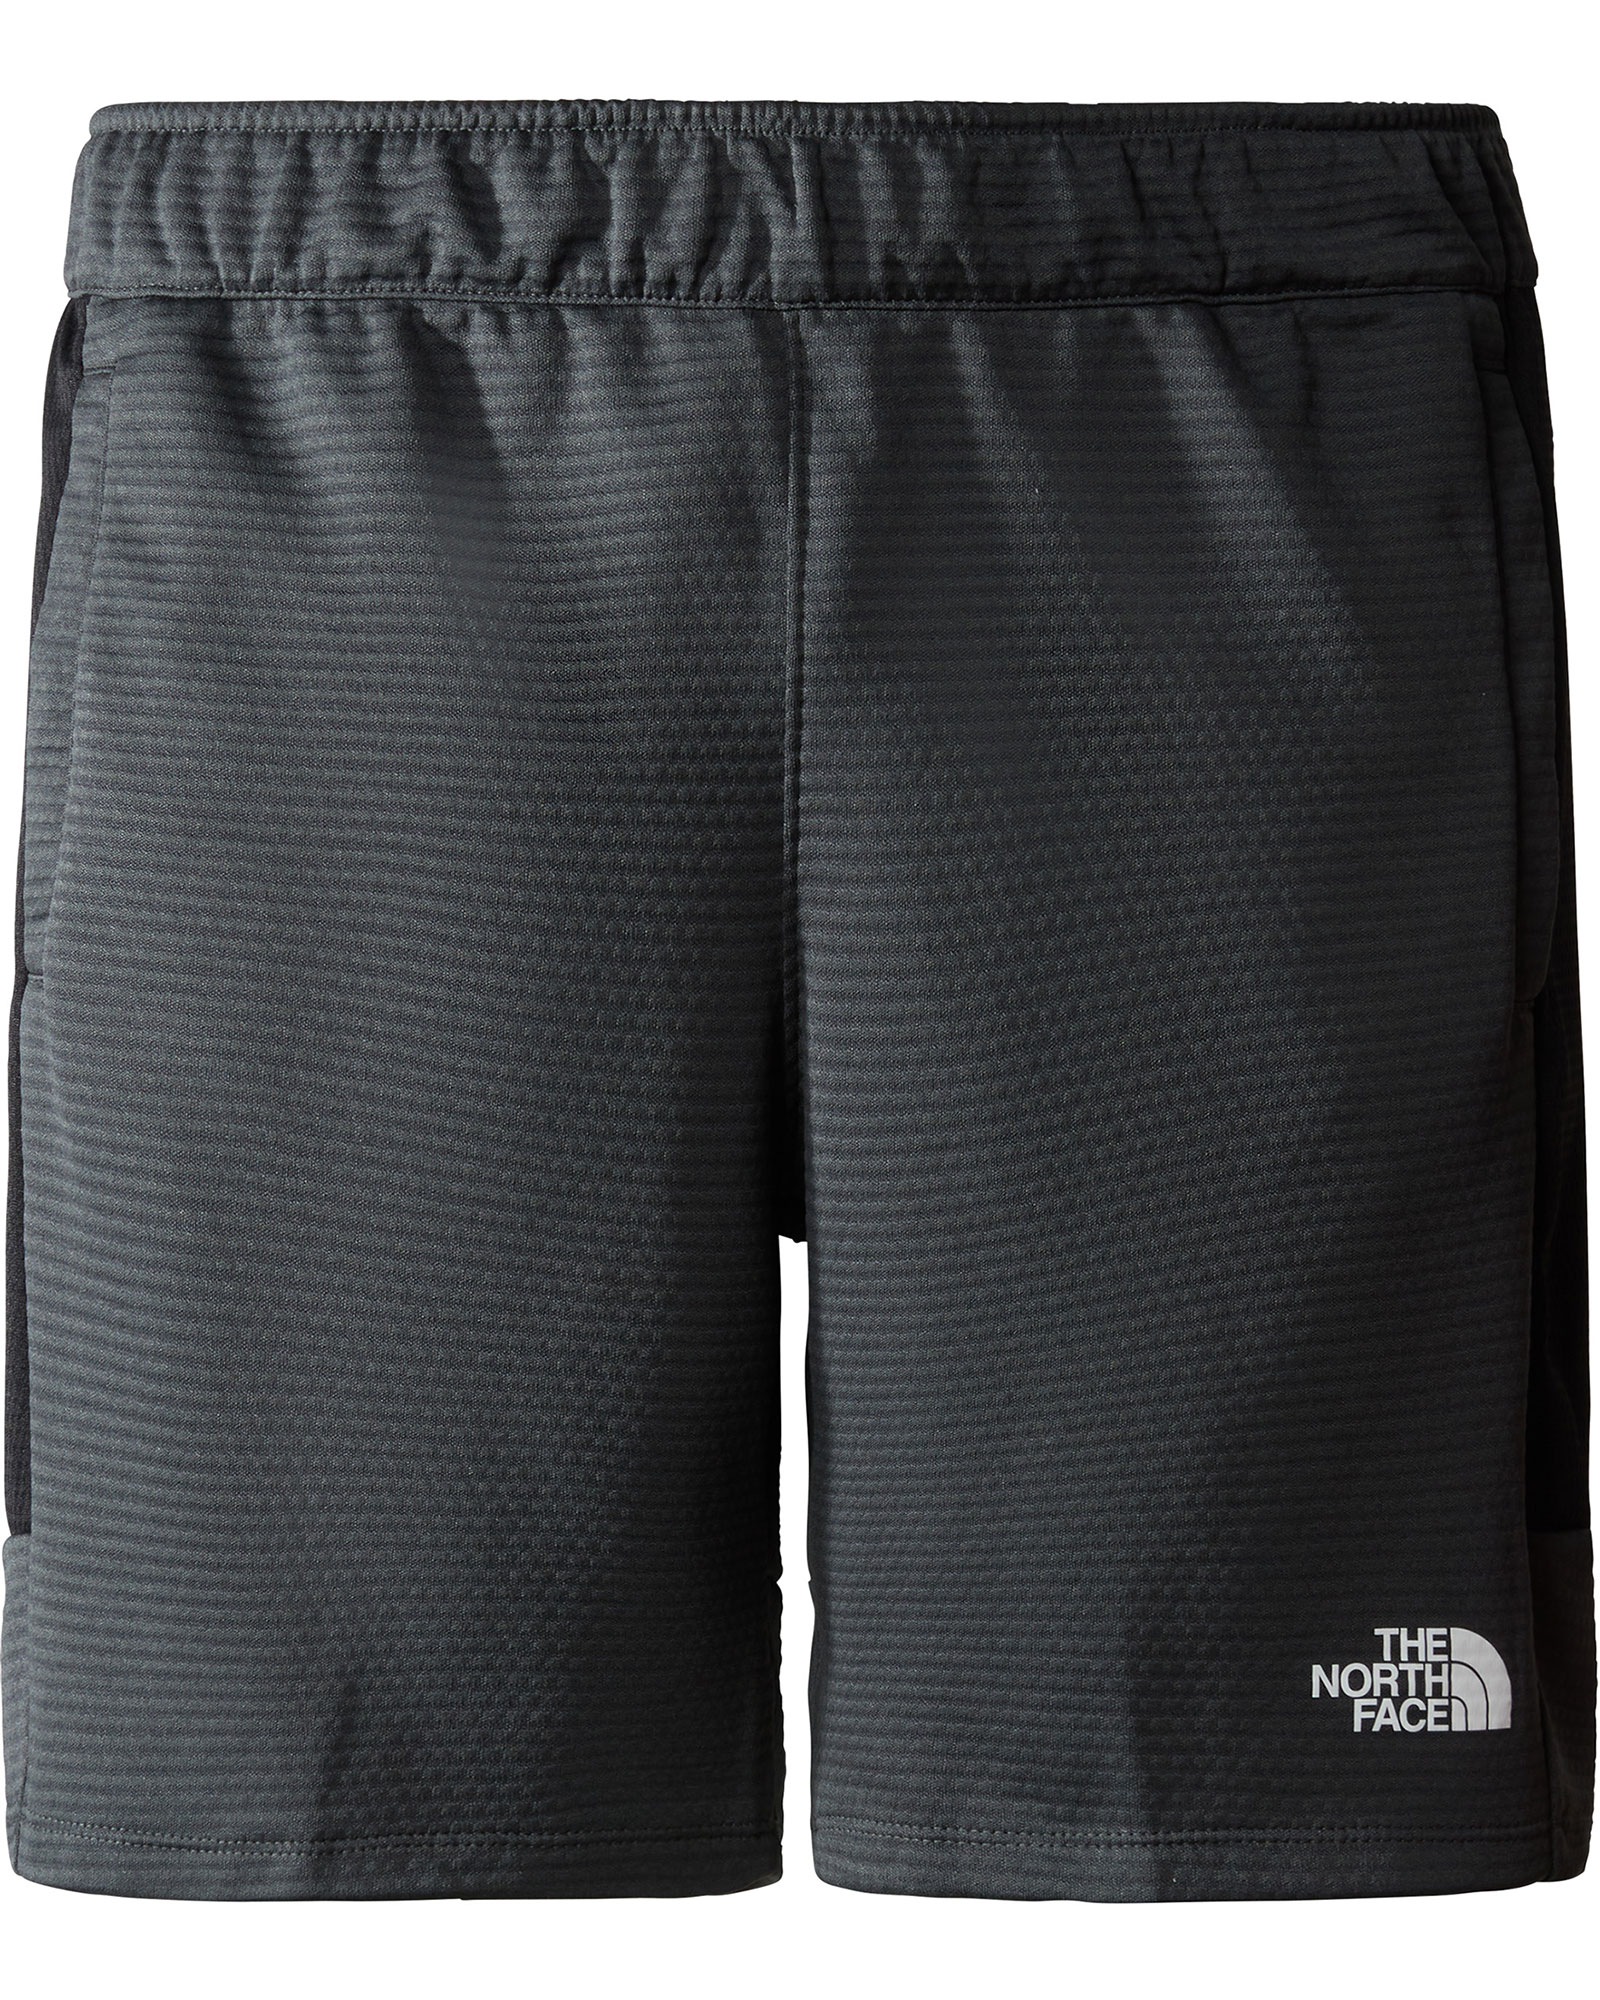 The North Face Men’s MA Fleece Shorts - Asphalt Grey-TNF Black XS